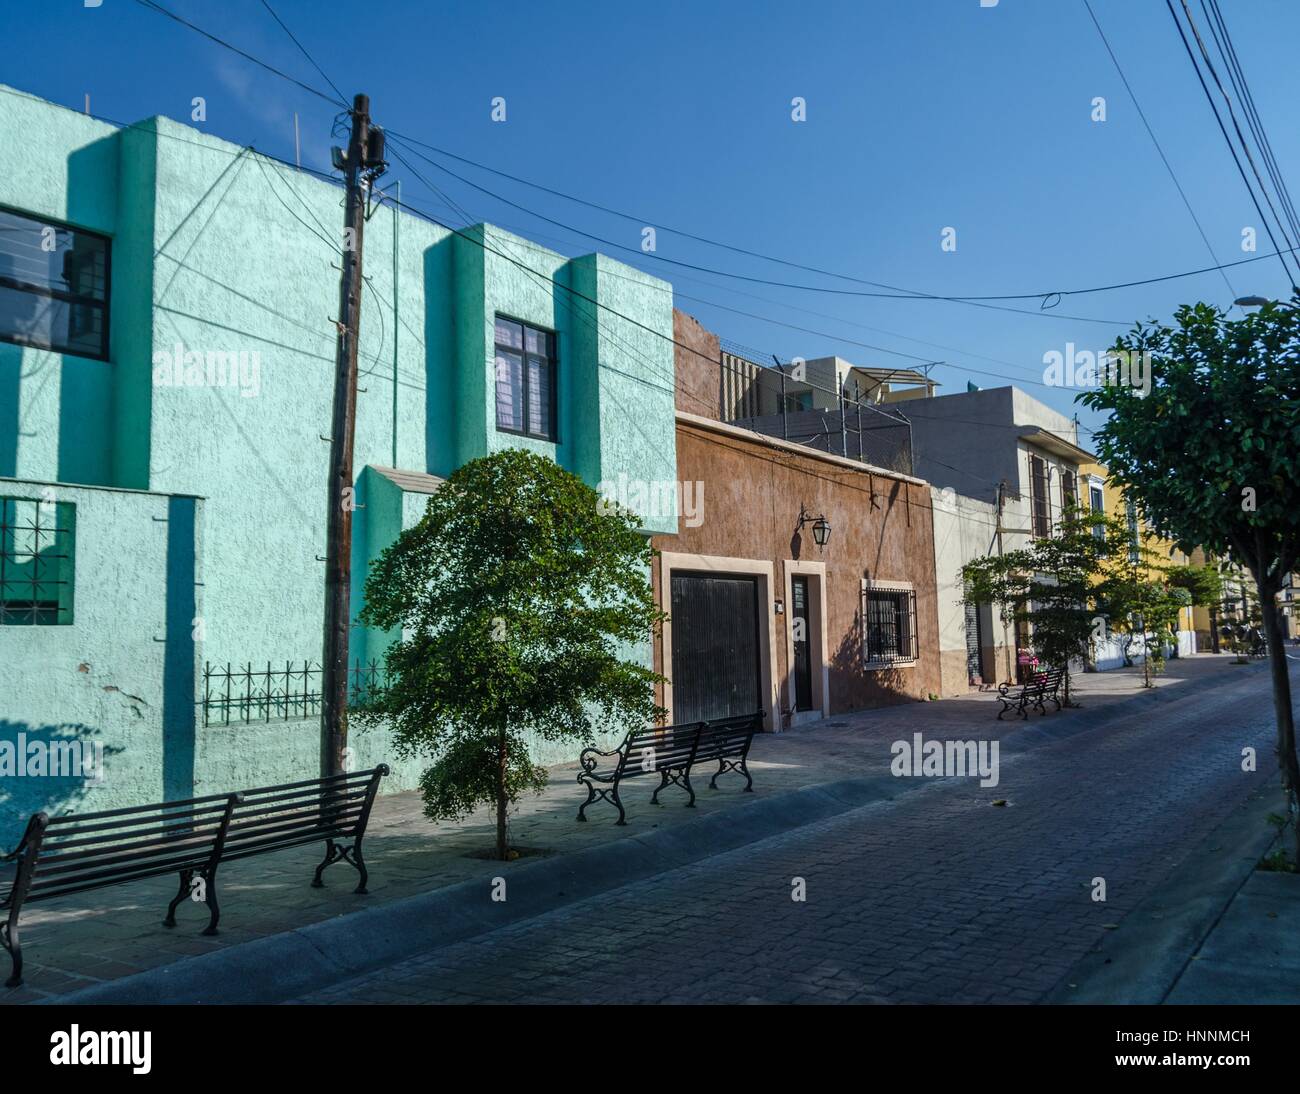 An interesting example of architecture in Tlaquepaque, Guadalajara, Mexico. Stock Photo